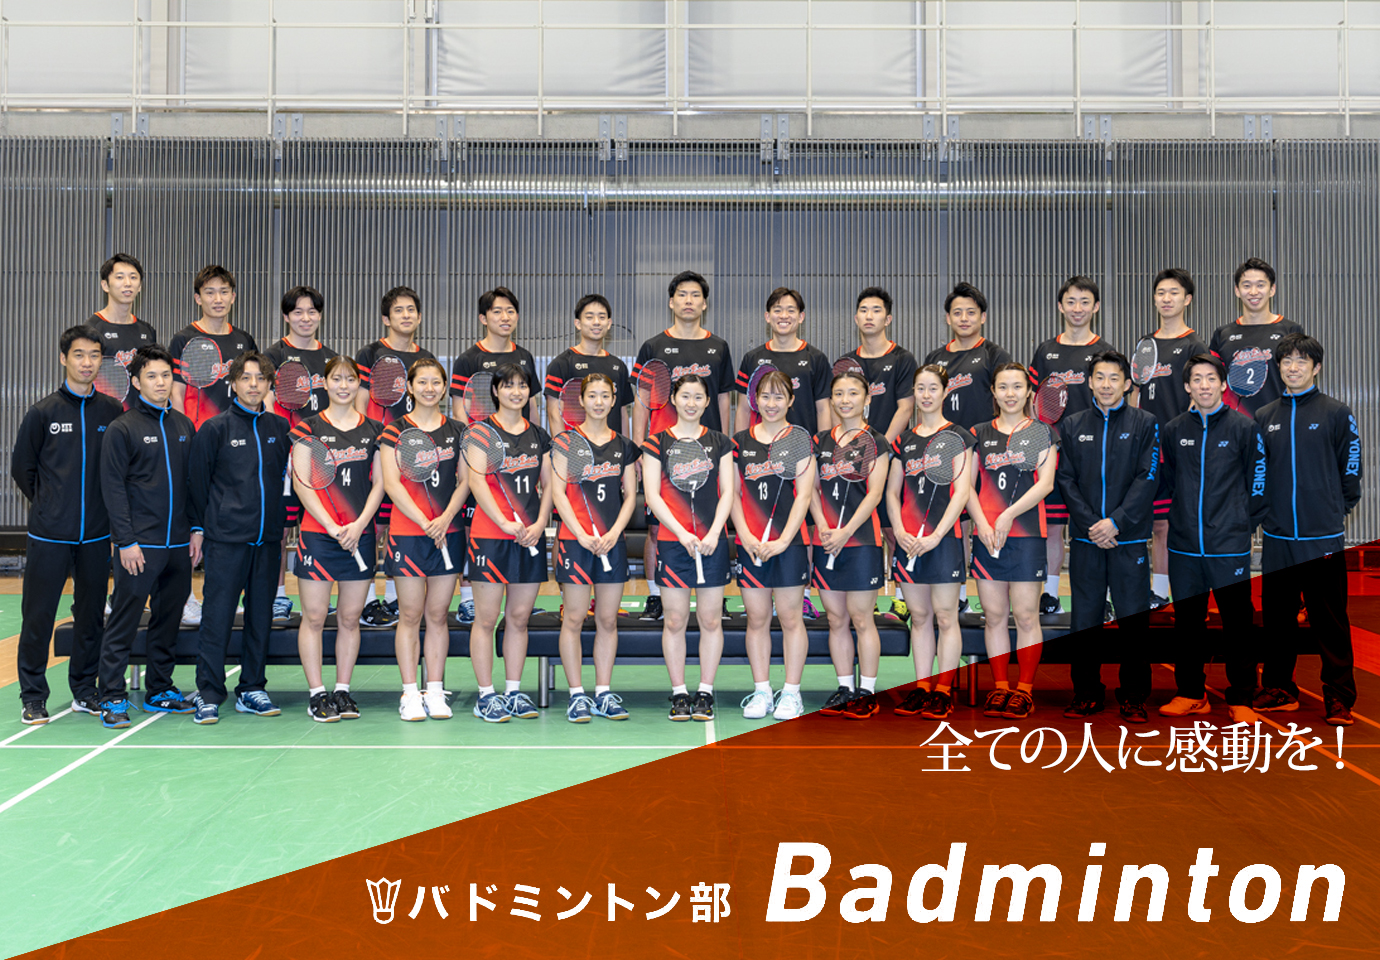 Badminton oh~g